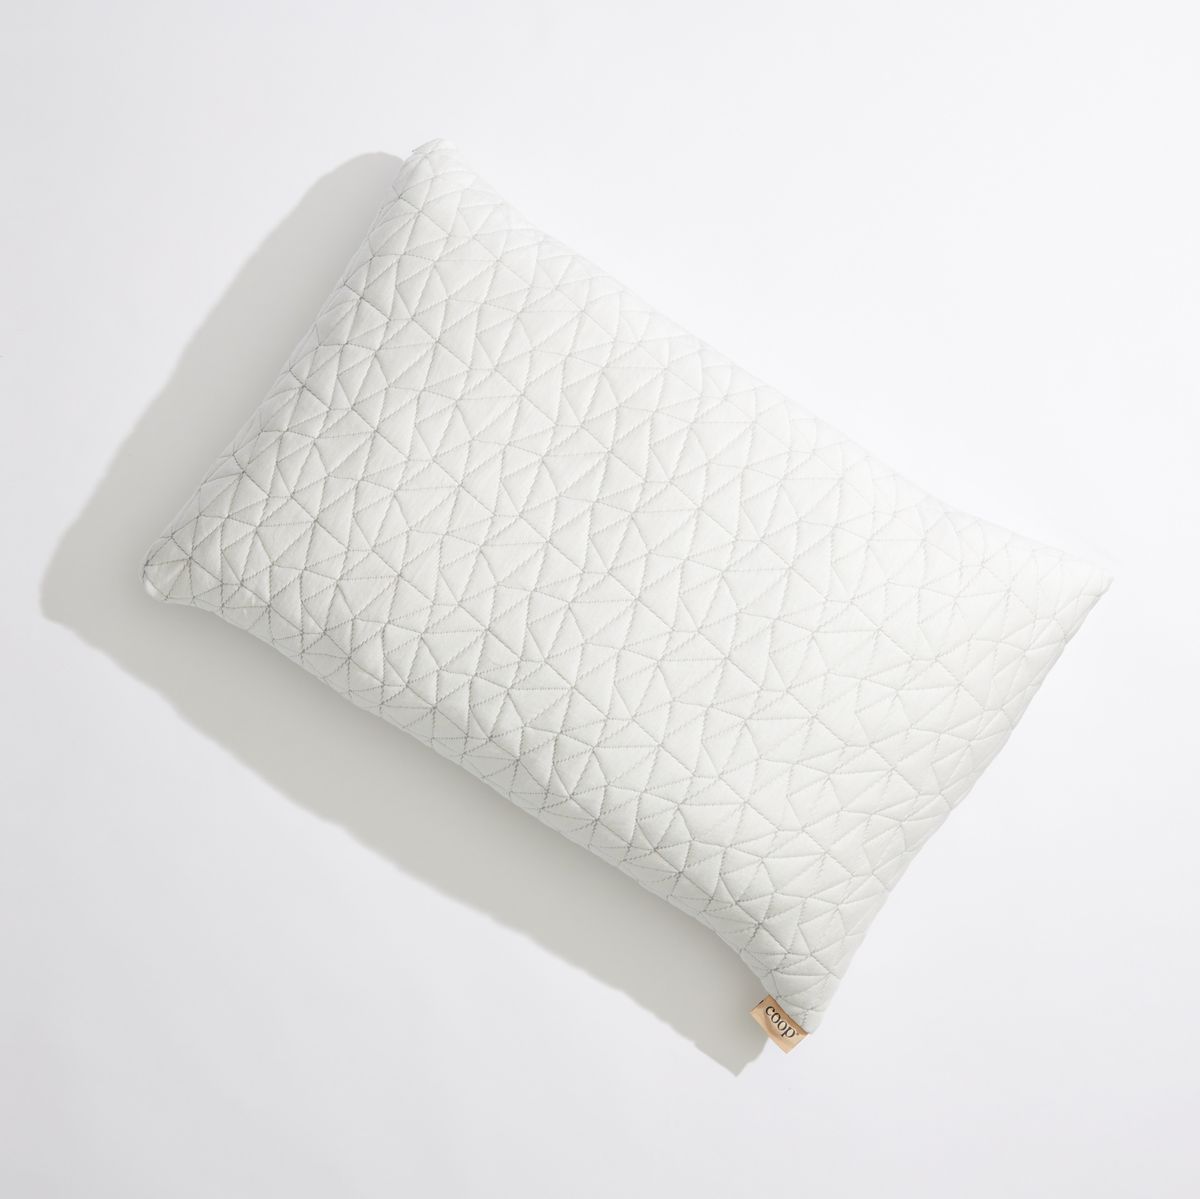 Coop Home Goods Original Pillow Review 2021